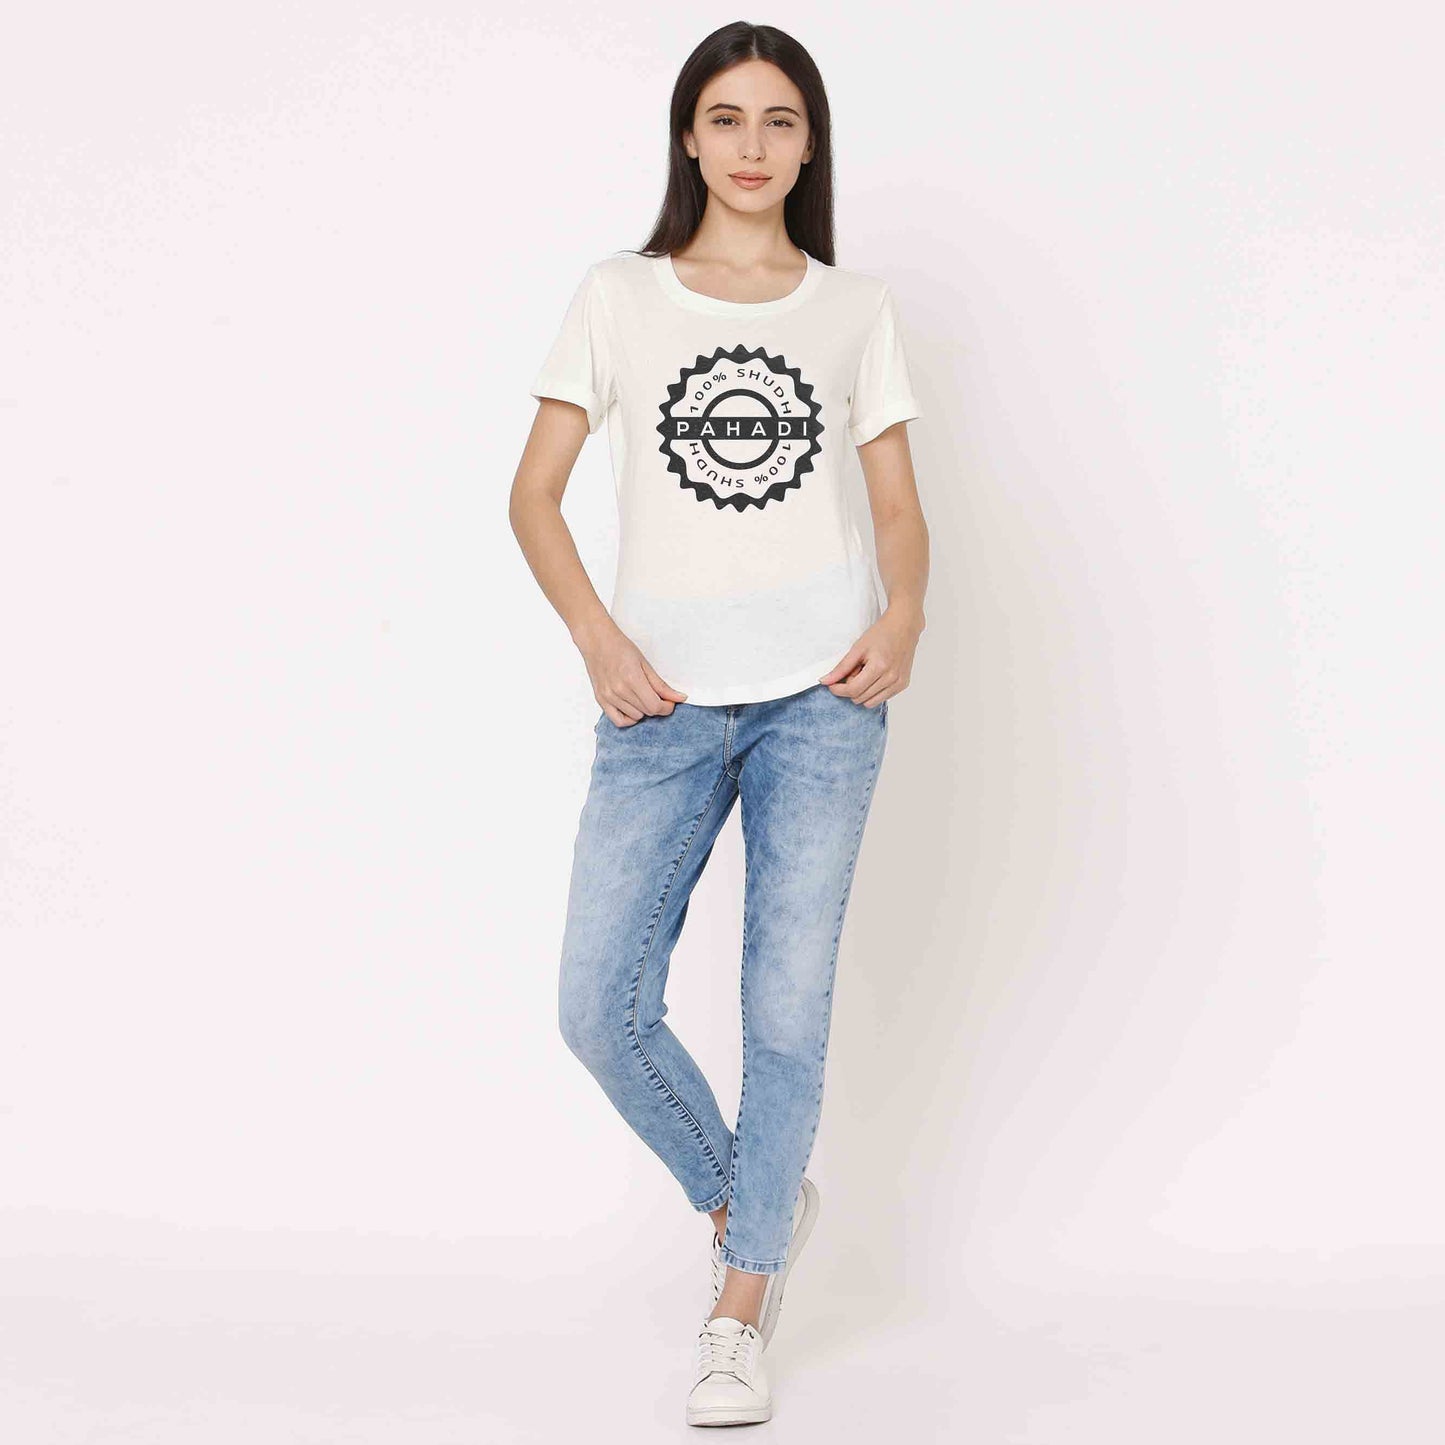 Slogan tshirt for women - Mountain Pahadi Girl Nutcase